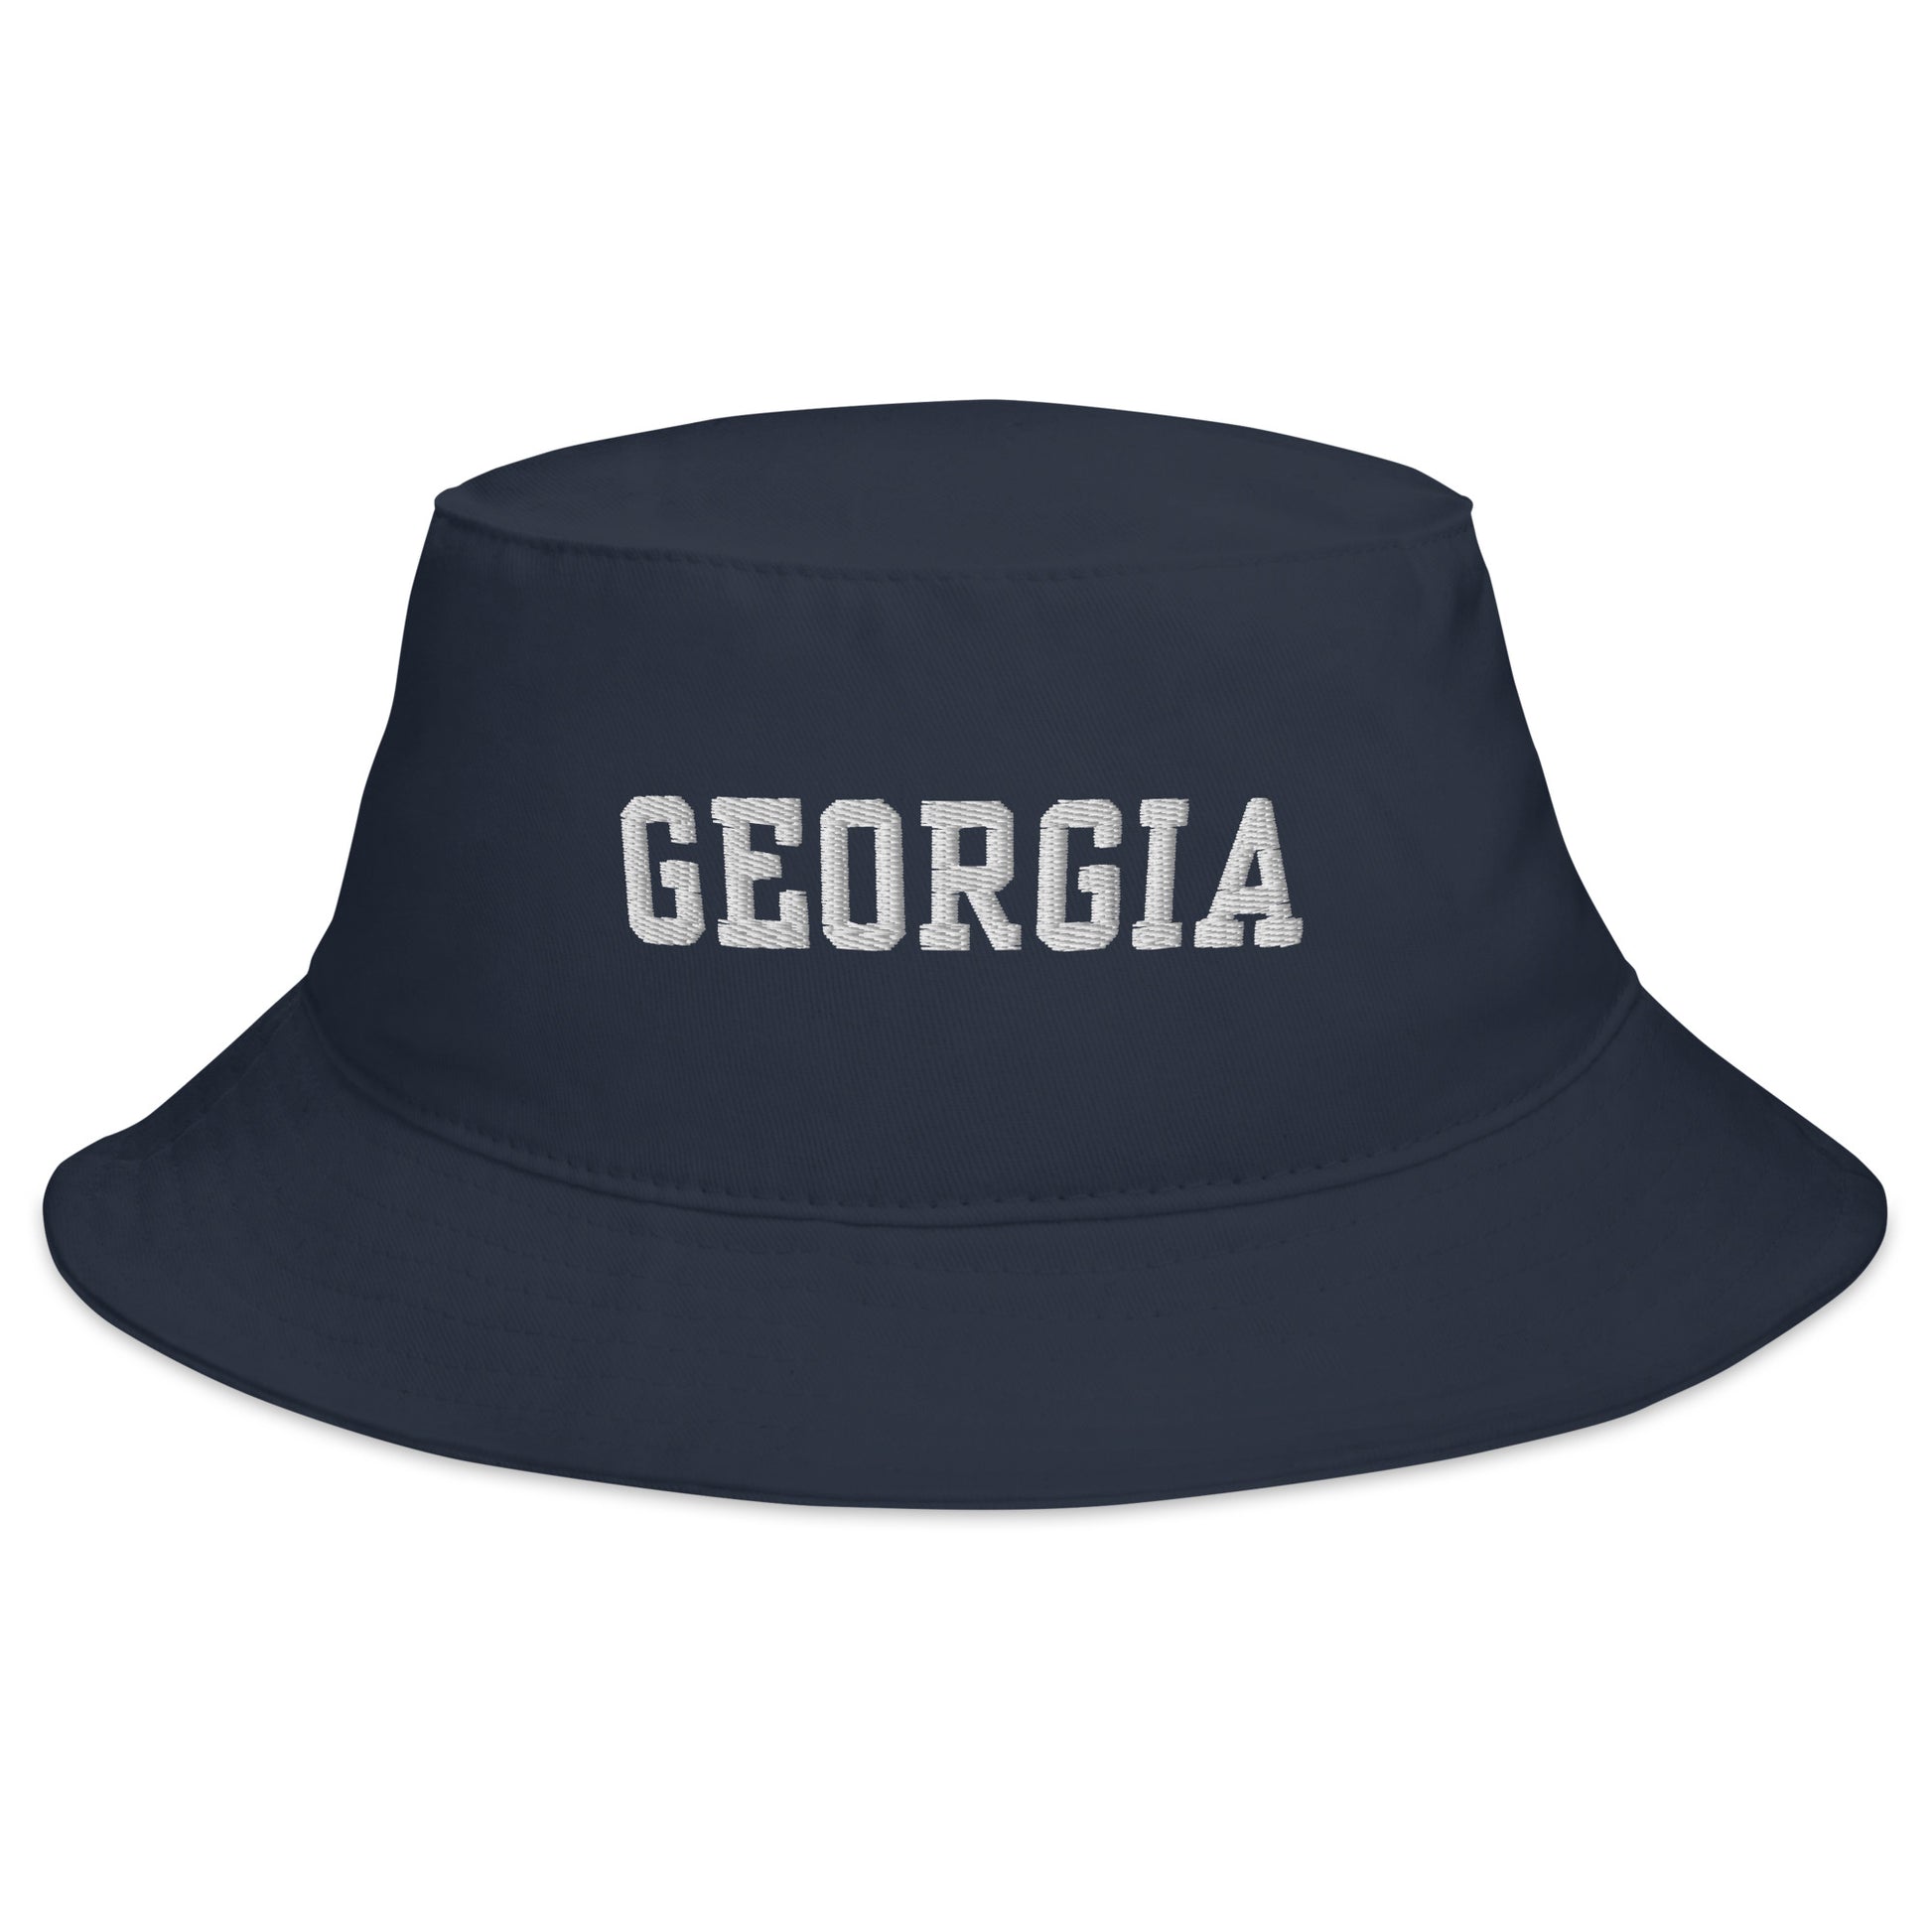 Georgia Bucket Hat navy